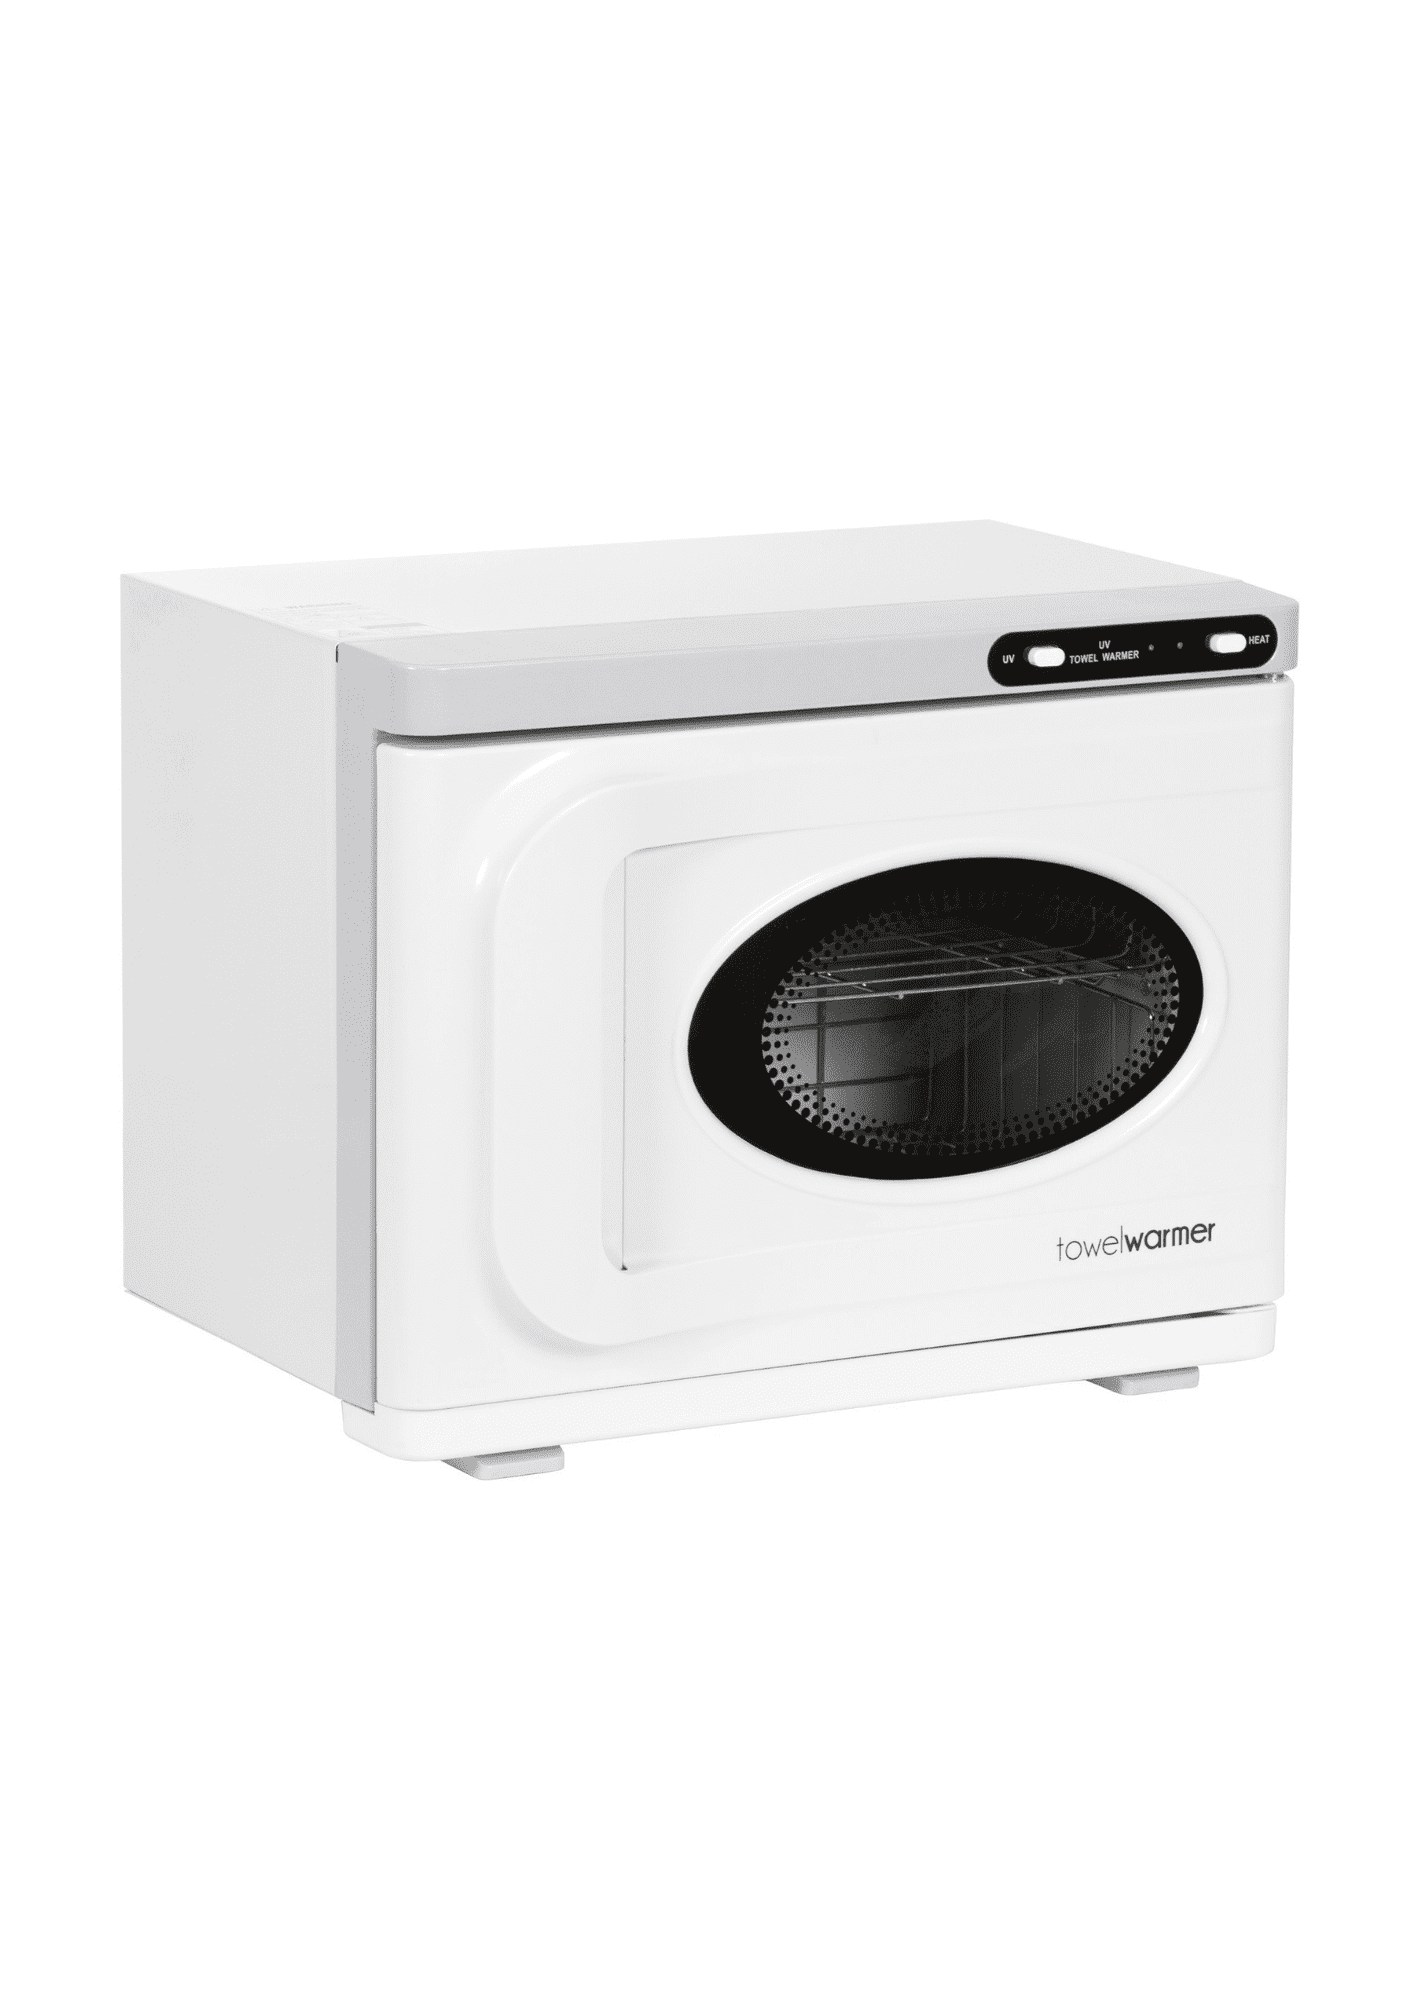 KAUN: calentador de toallas y esterilizador de 23lts